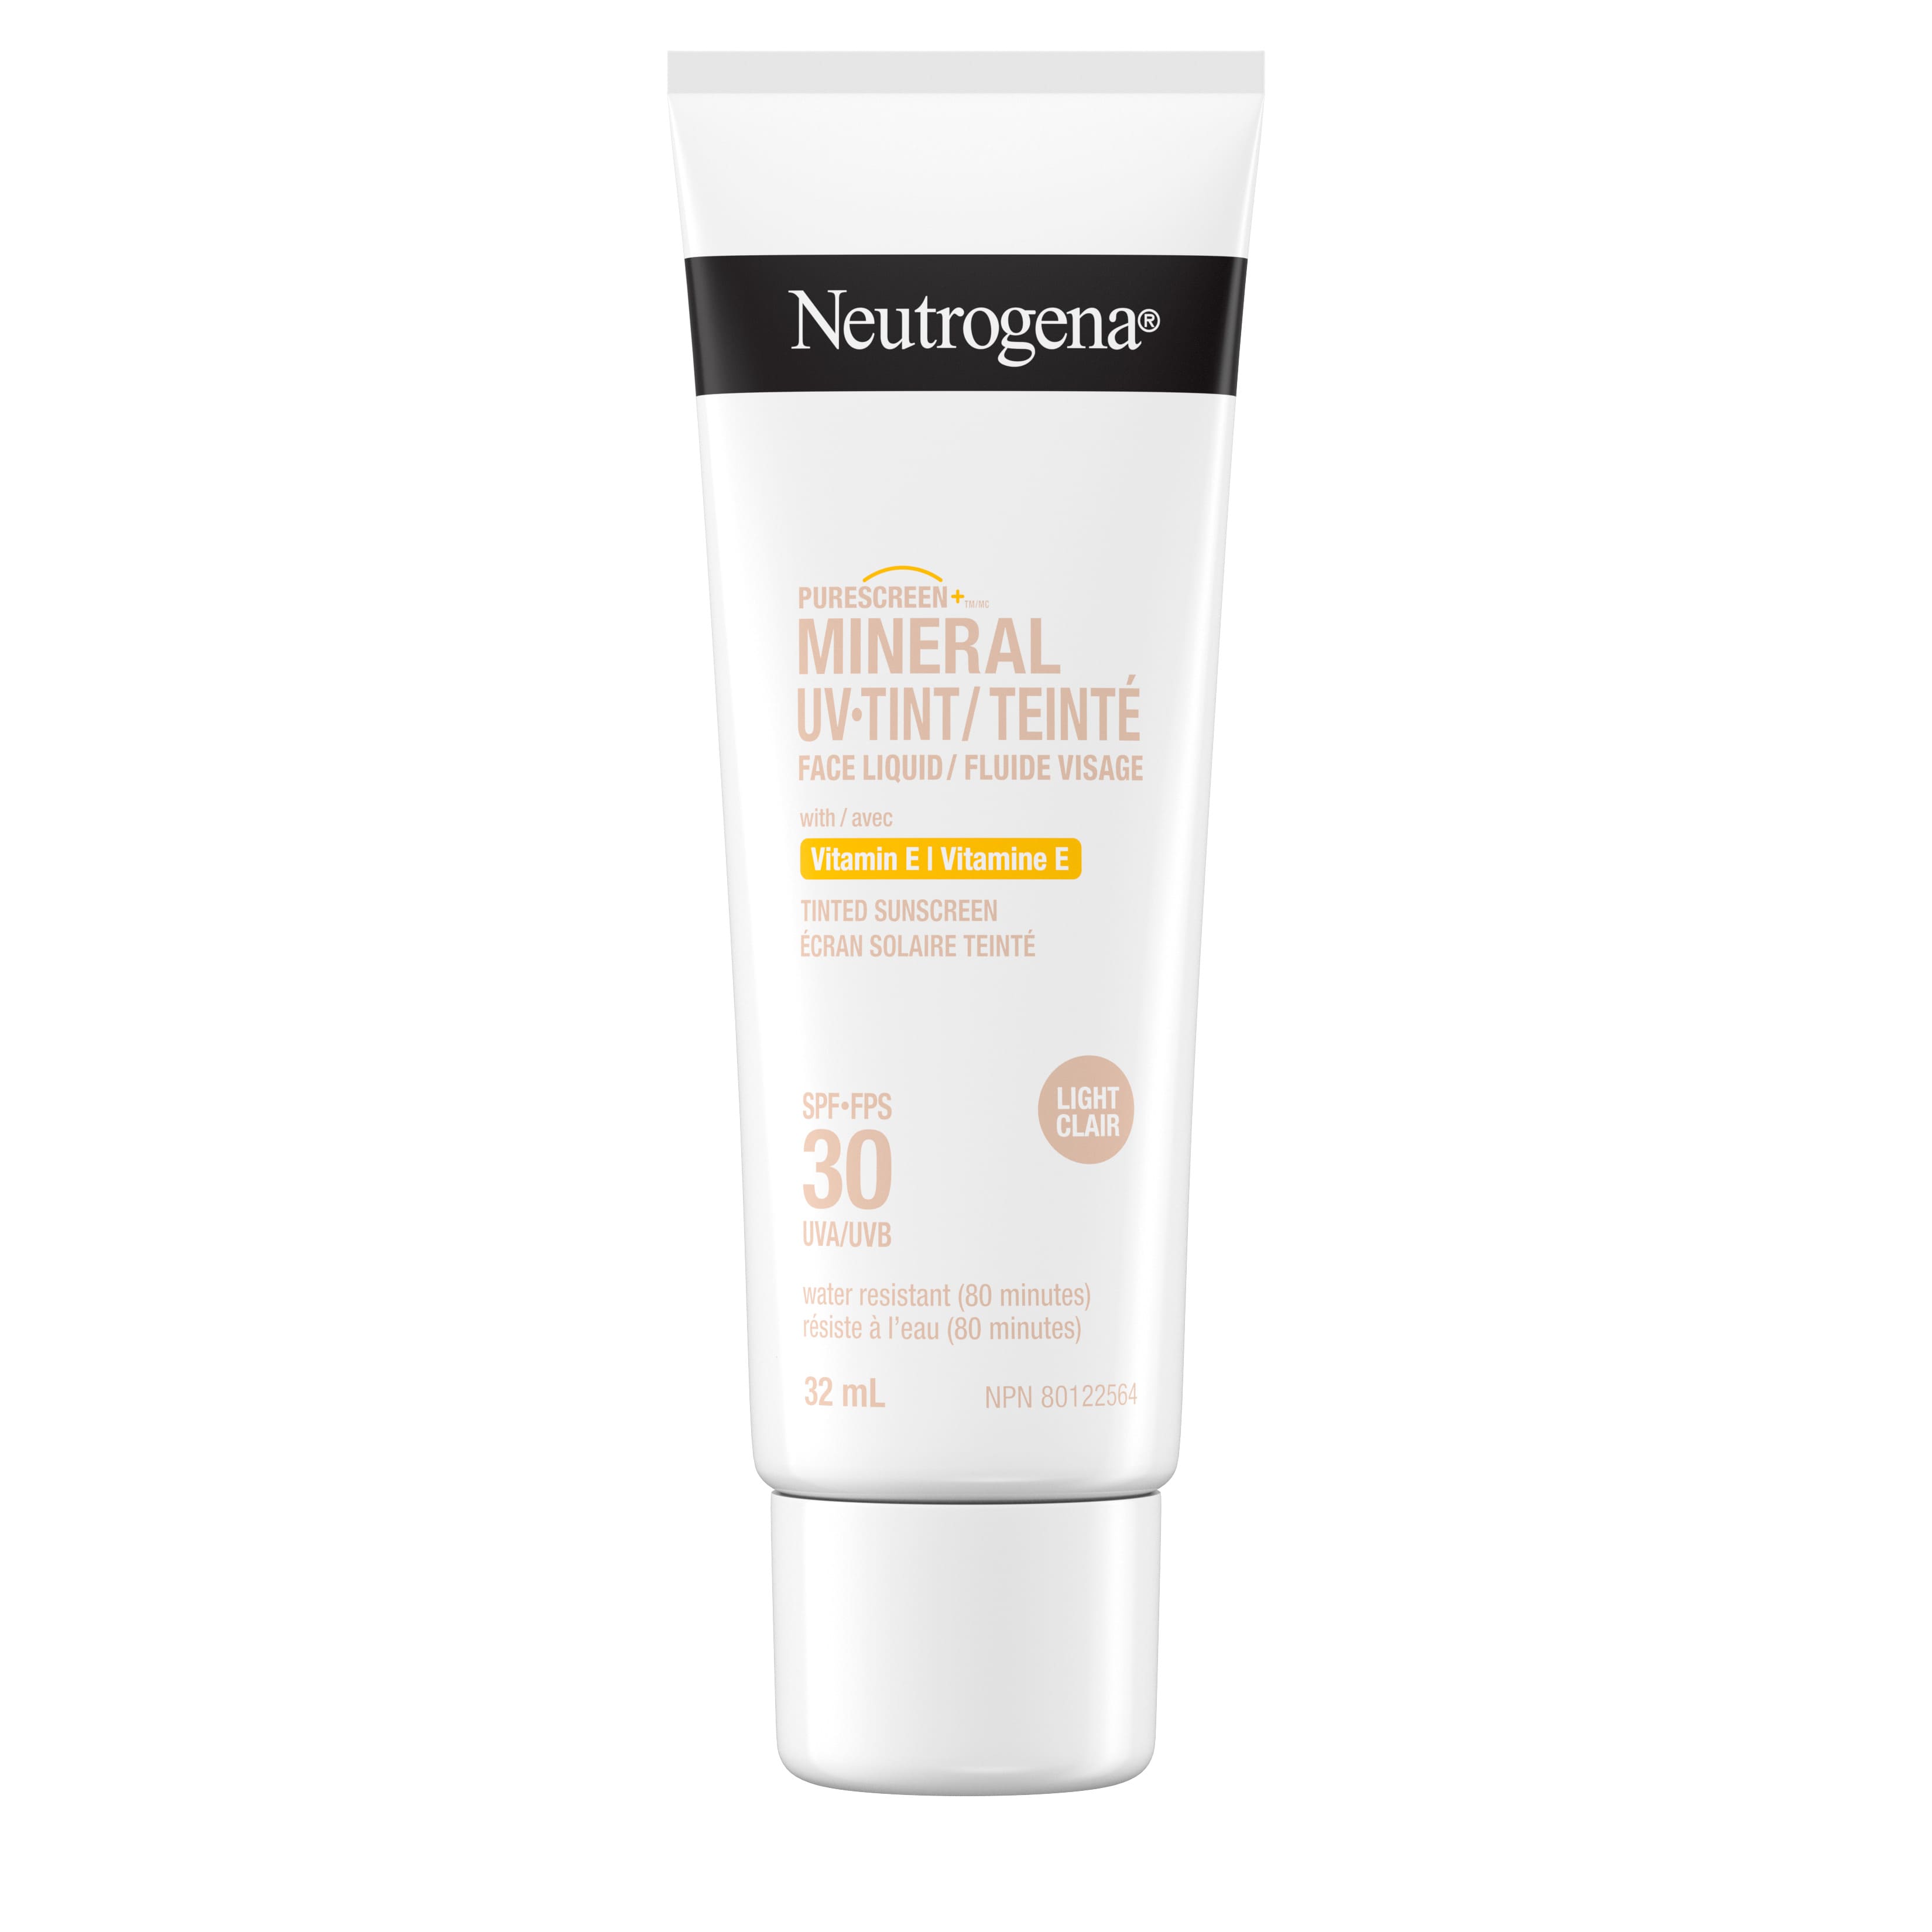 Neutrogena® Purescreen+™ Mineral UV Tint Face Liquid Sunscreen